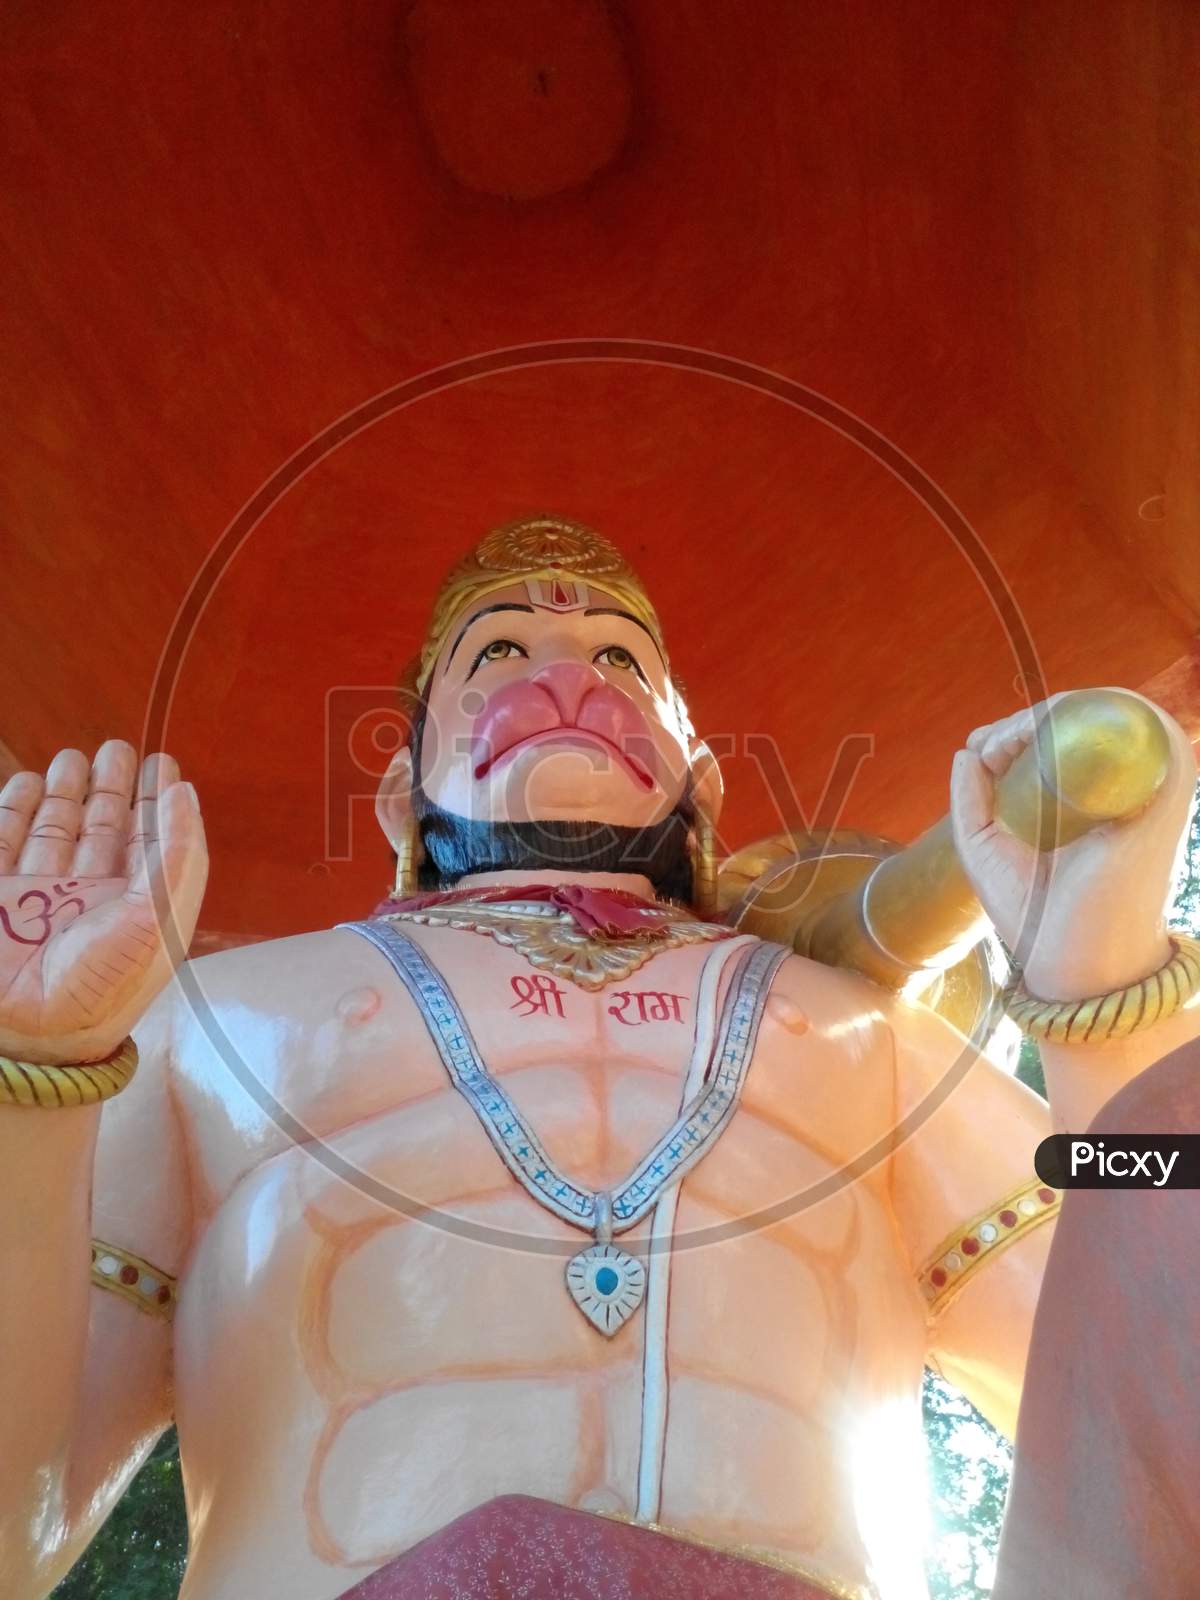 Hanuman ji nice image.